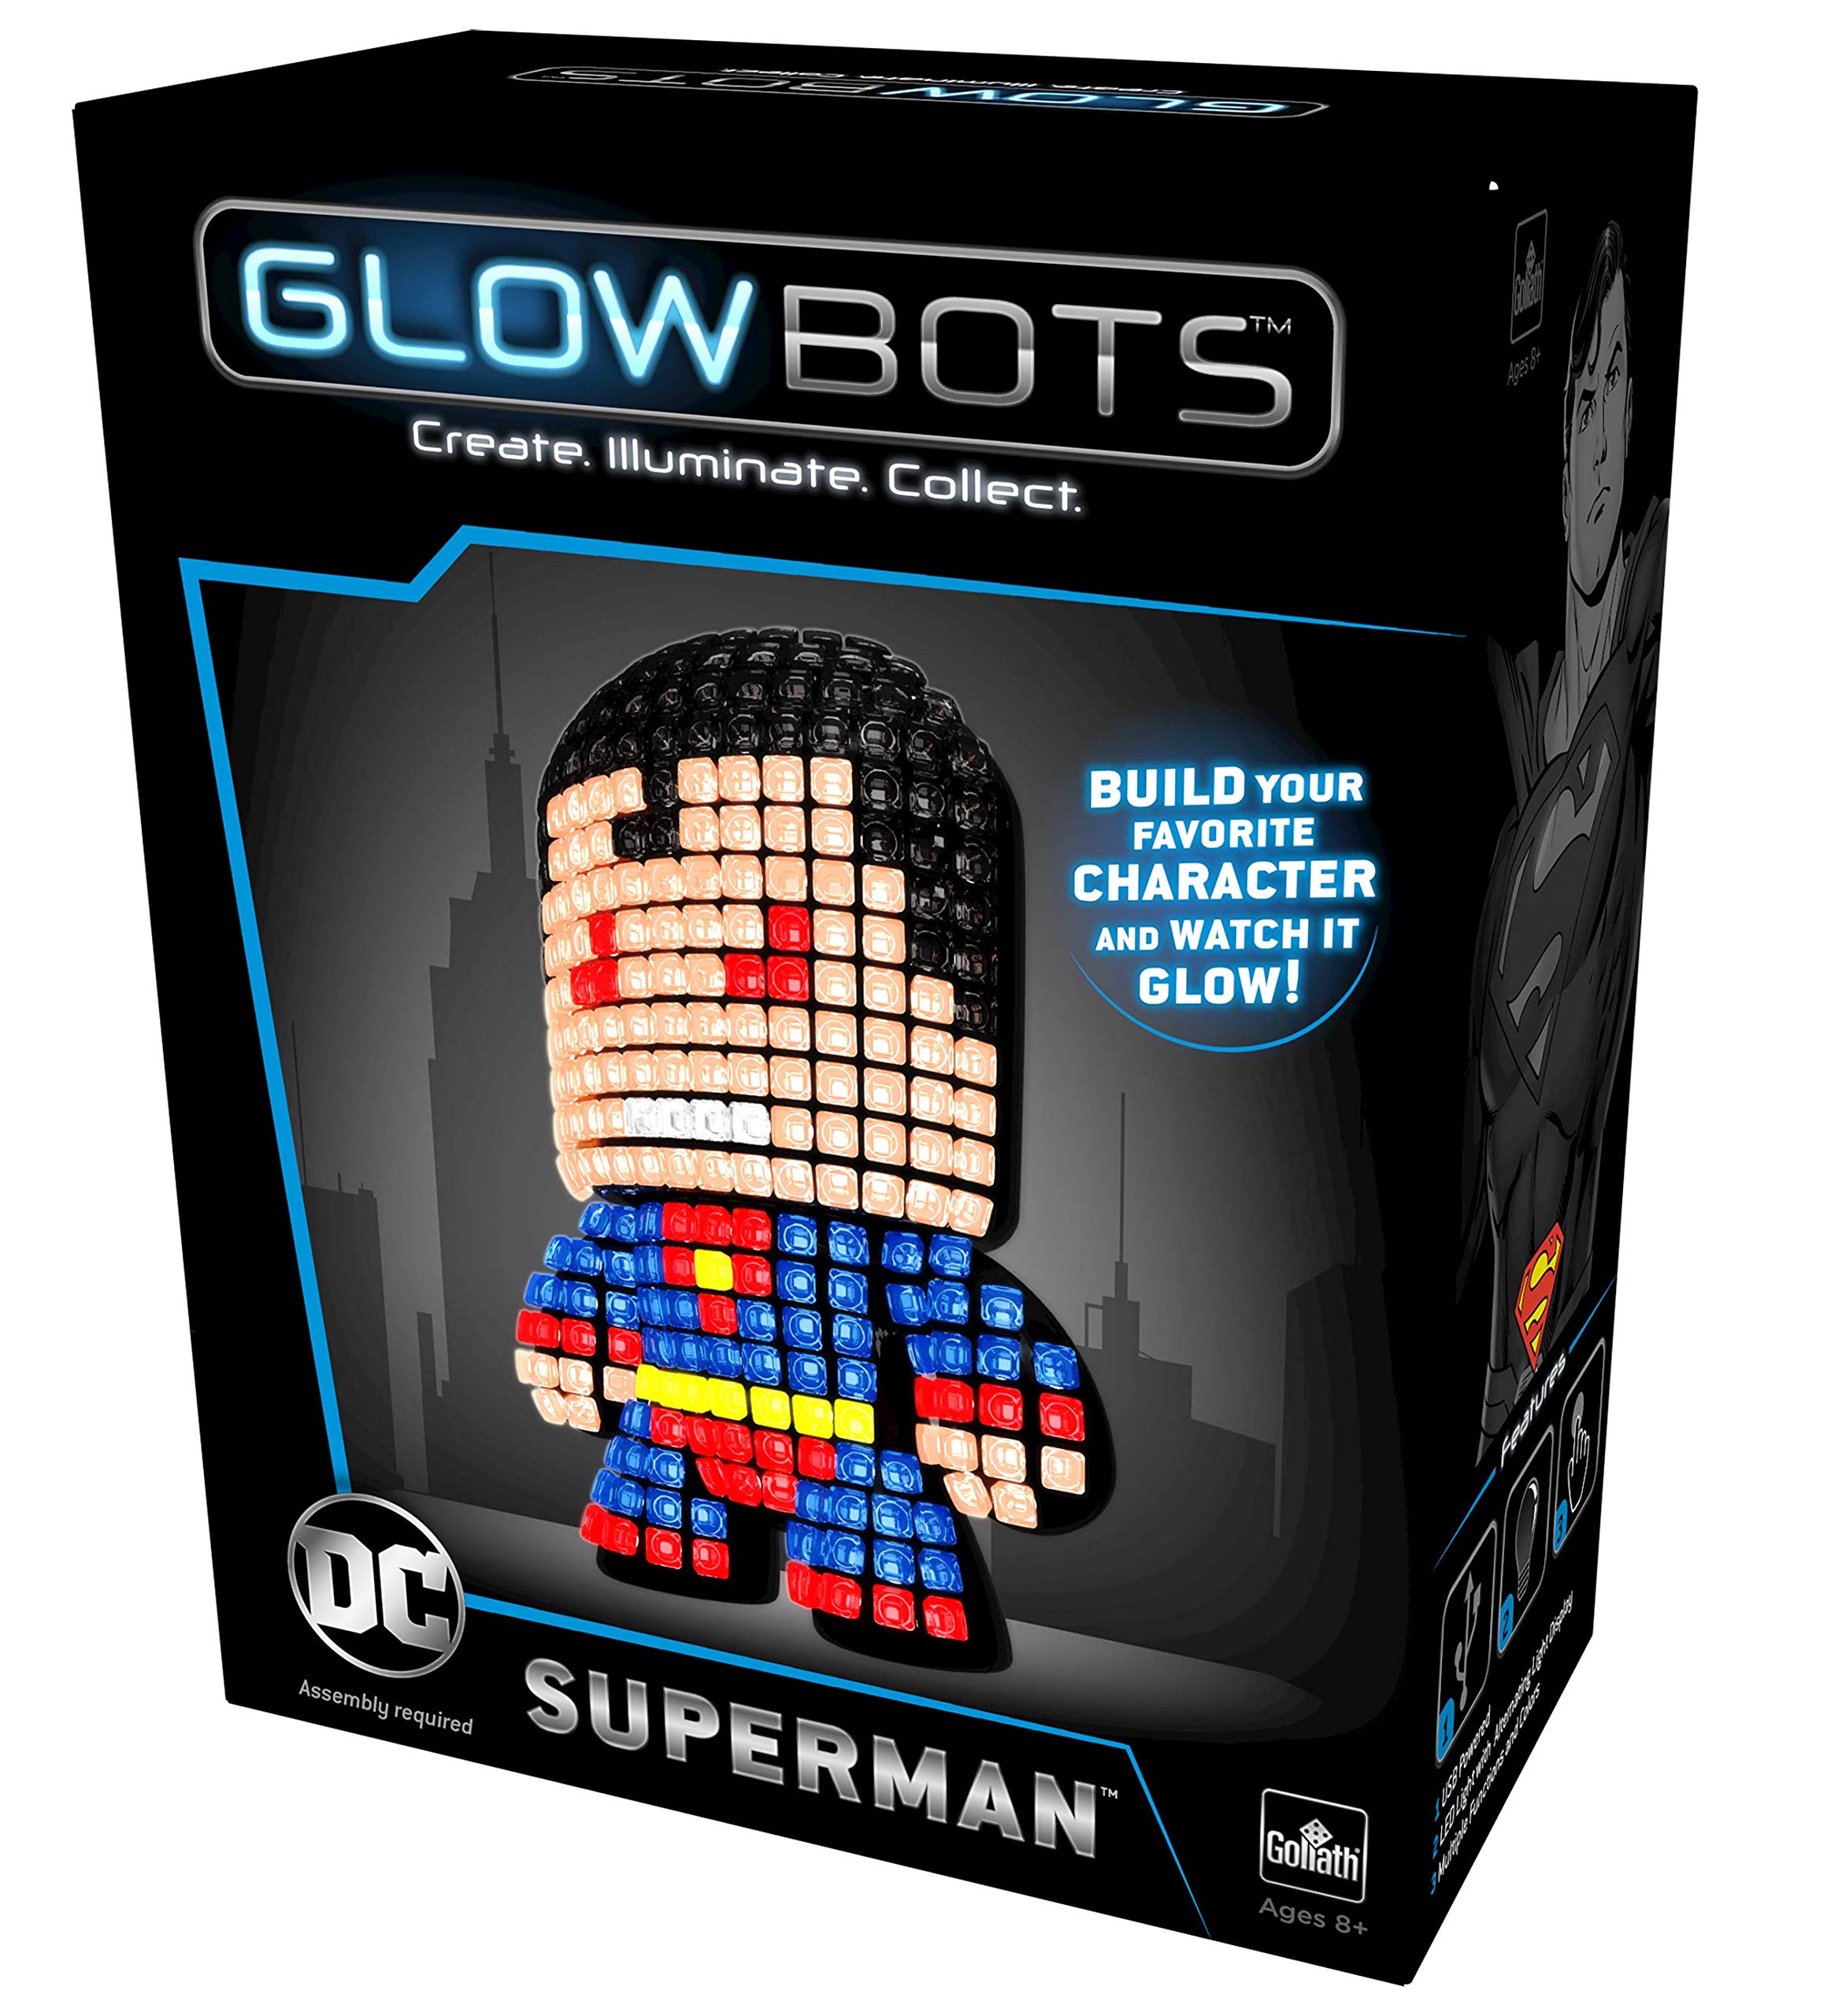 Goliath DC Glowbot Superman, Multicolor